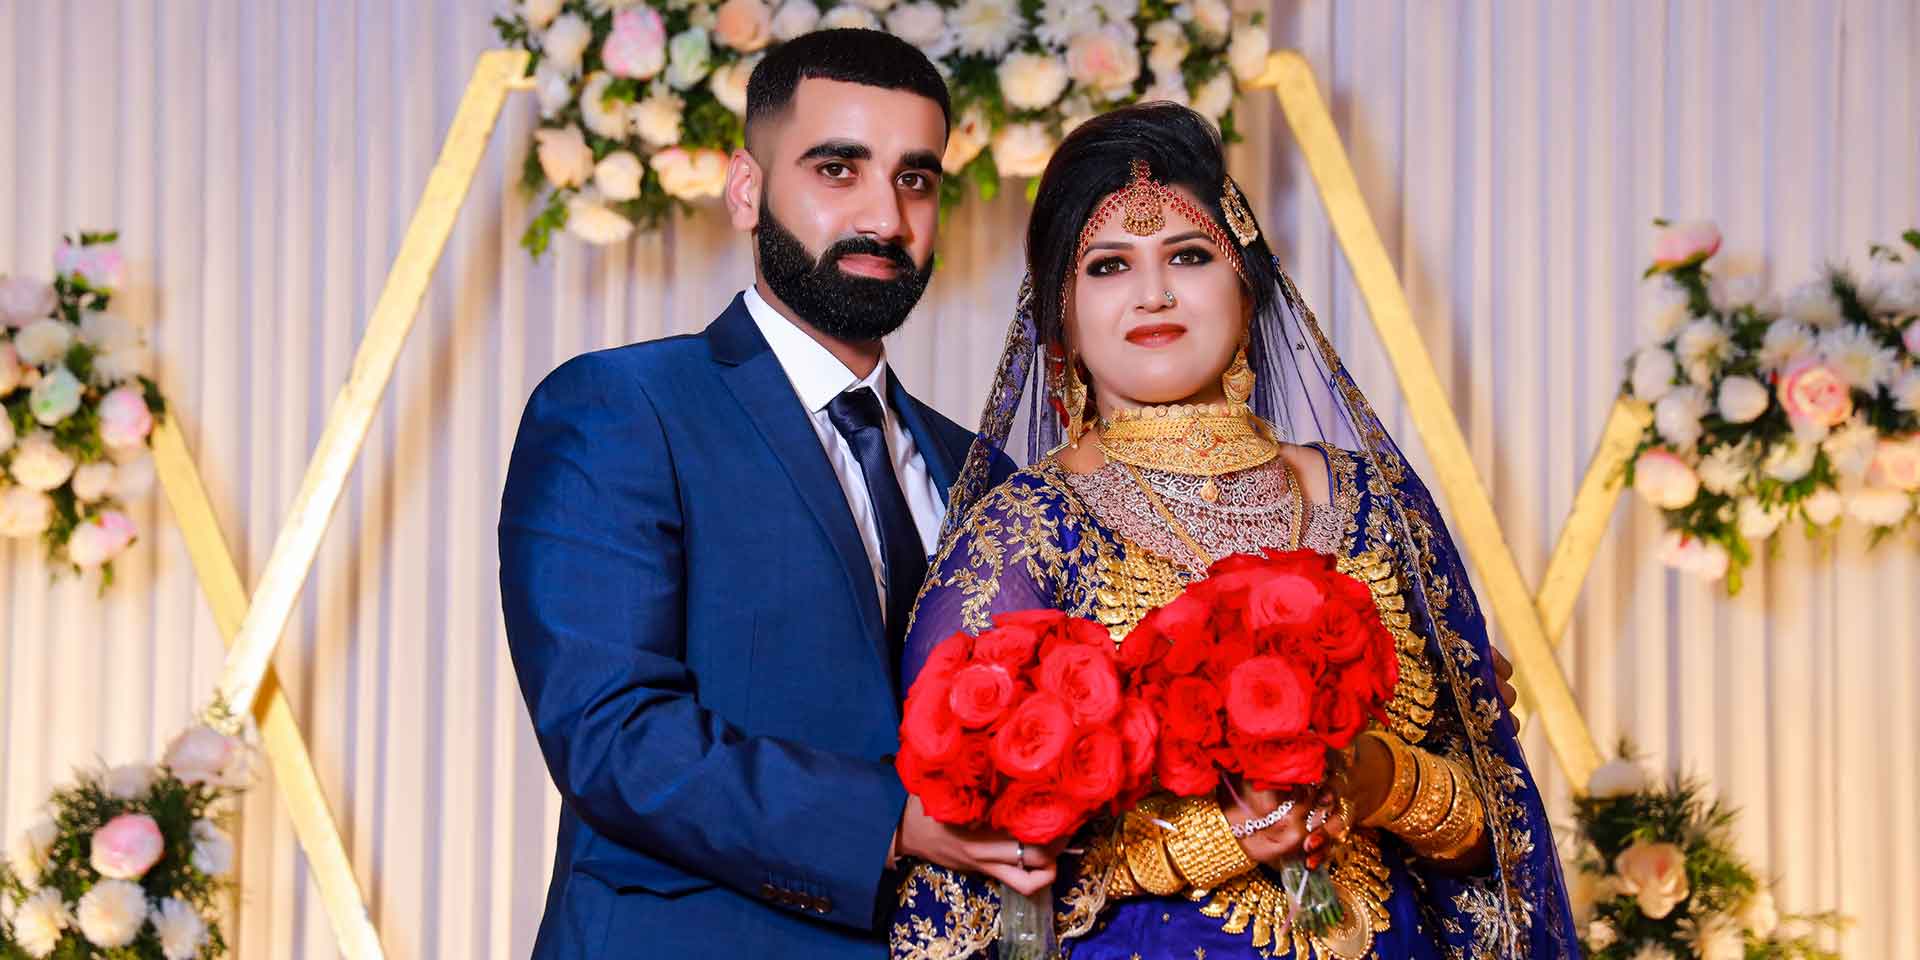 kerala muslim wedding dresses